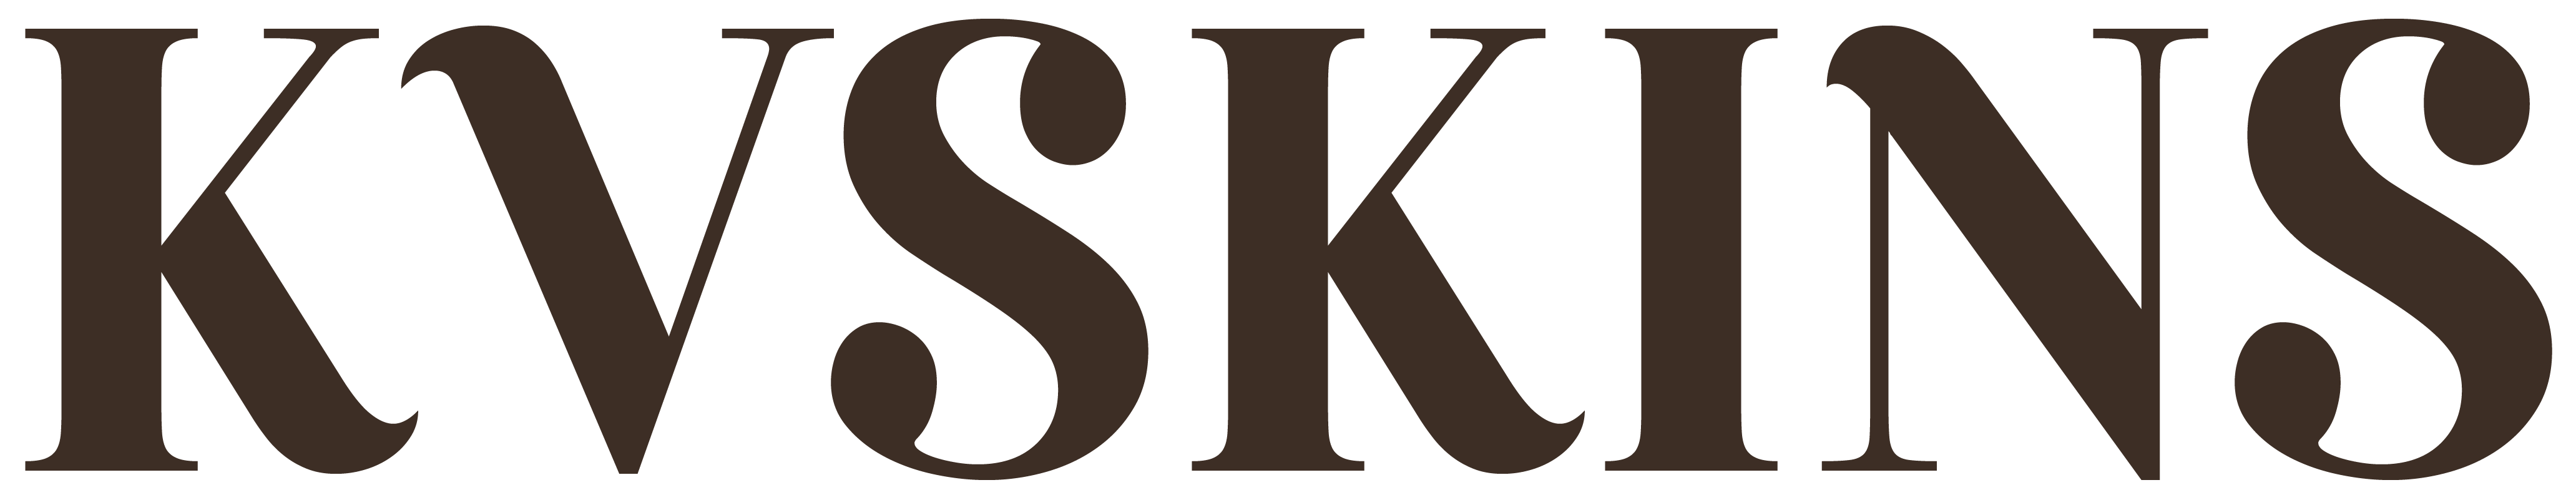 kvskins-logo